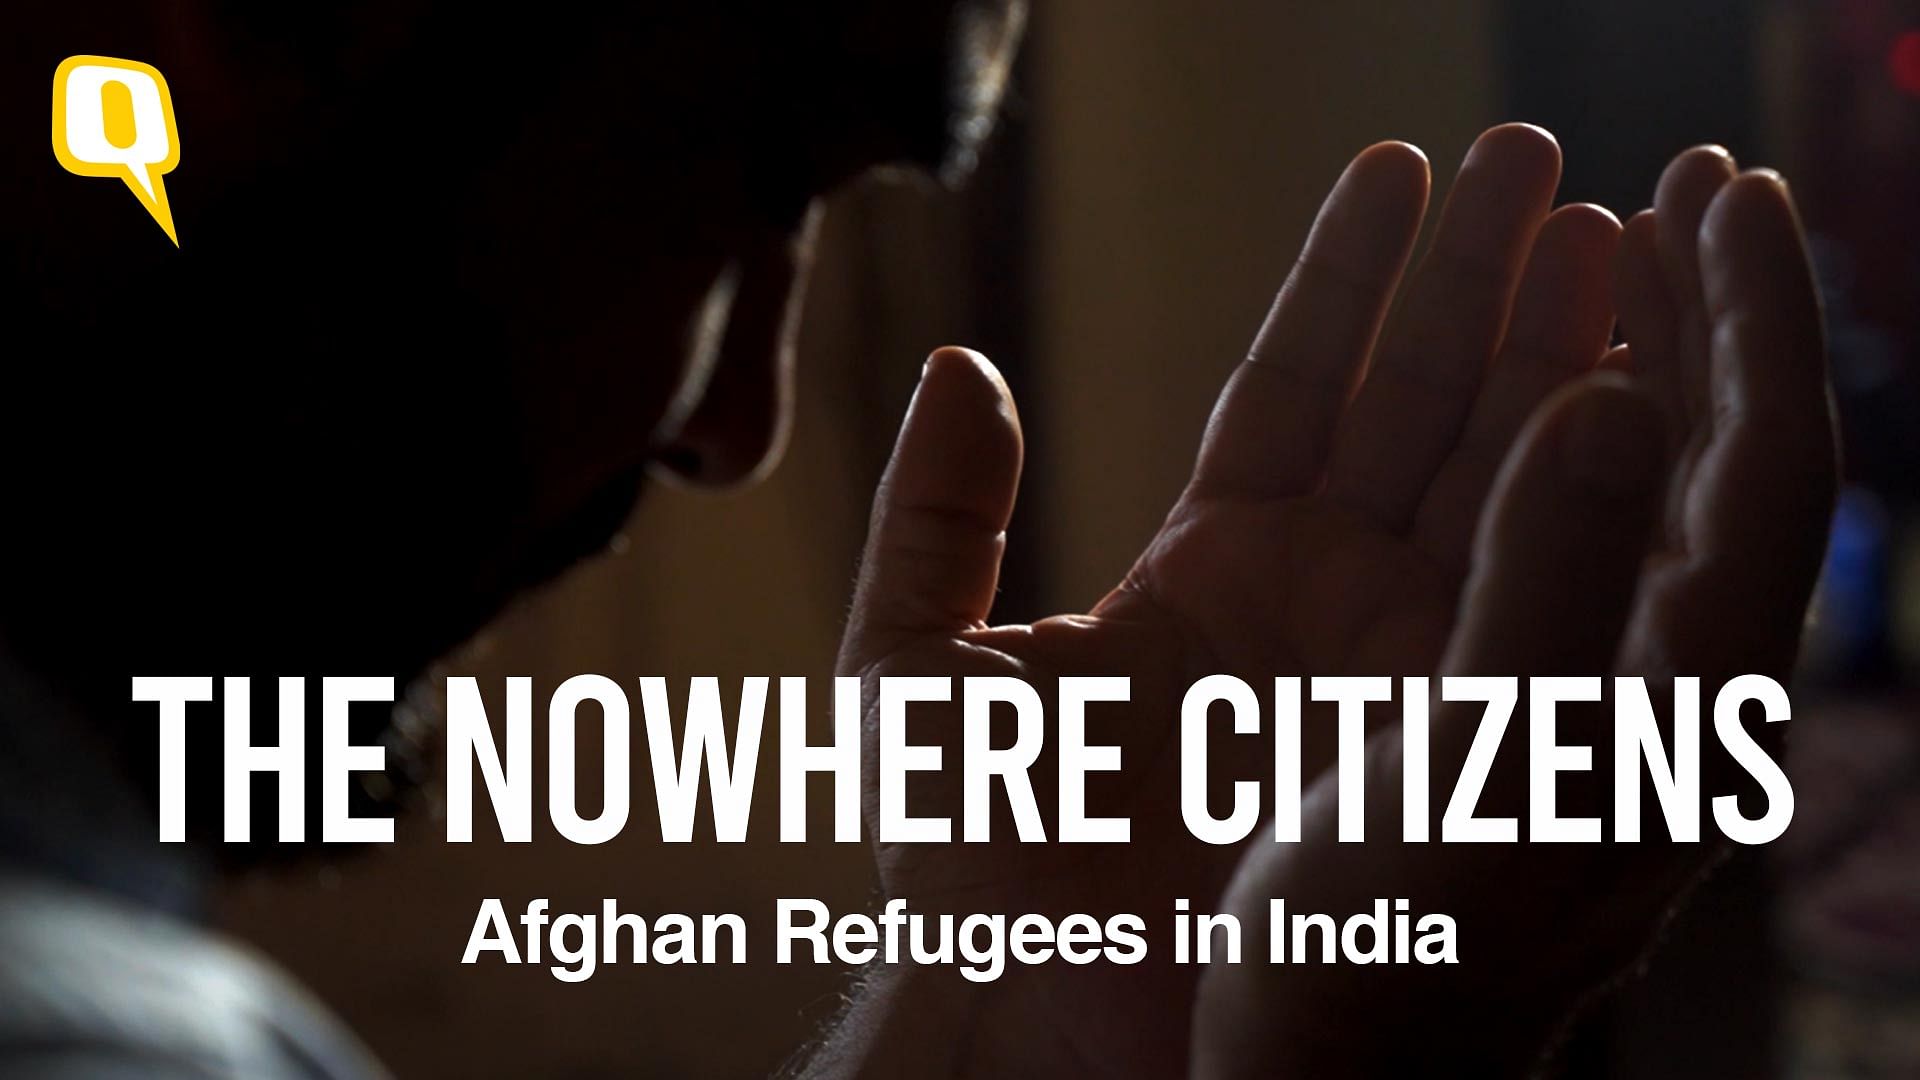 Zmarai Qaderi is an Afghan refugee, living in India since 2016.